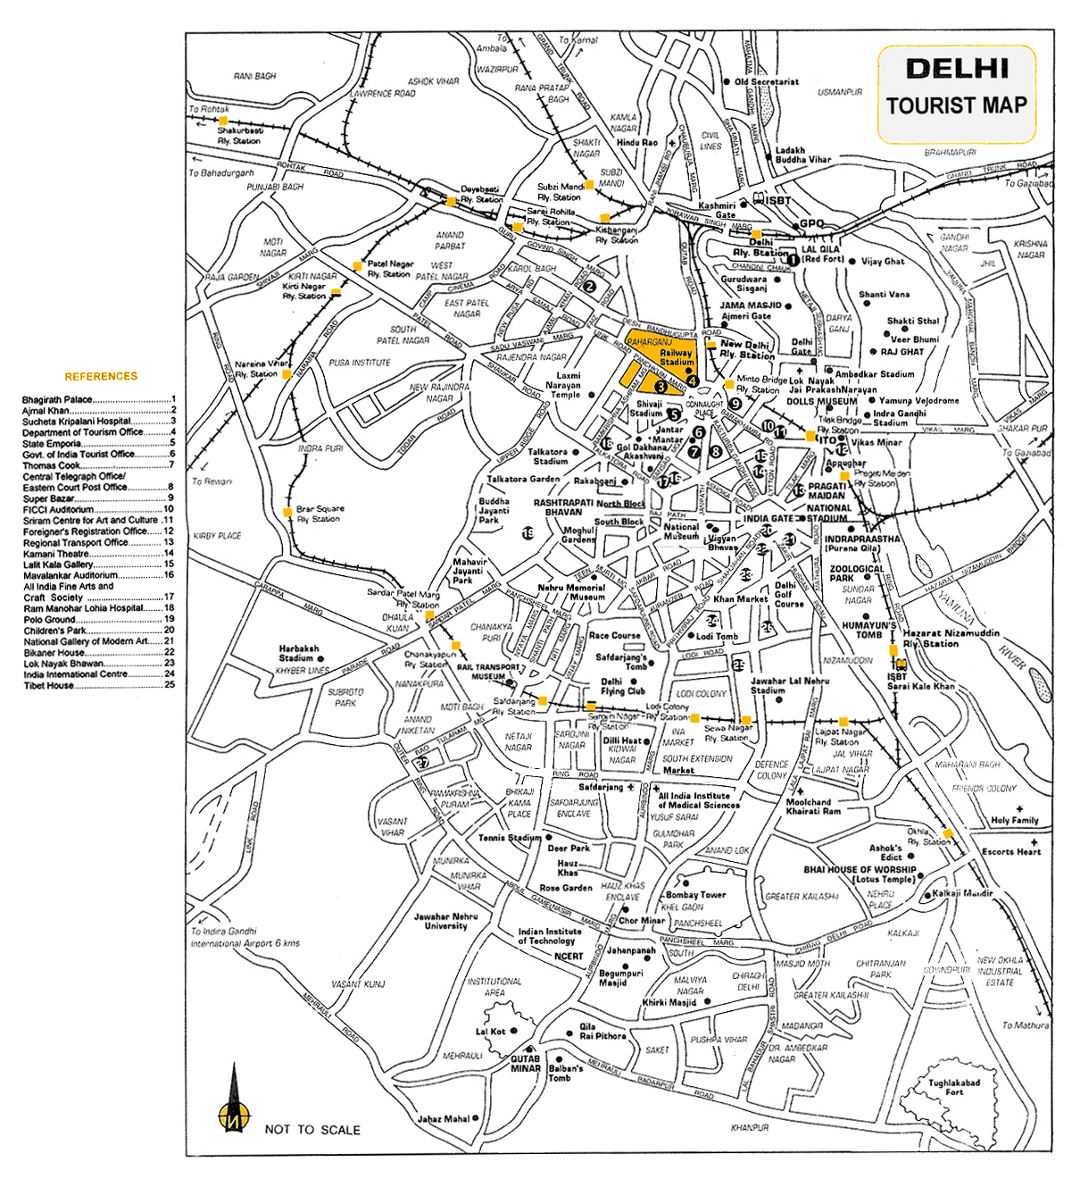 Detailed tourist map of Delhi city